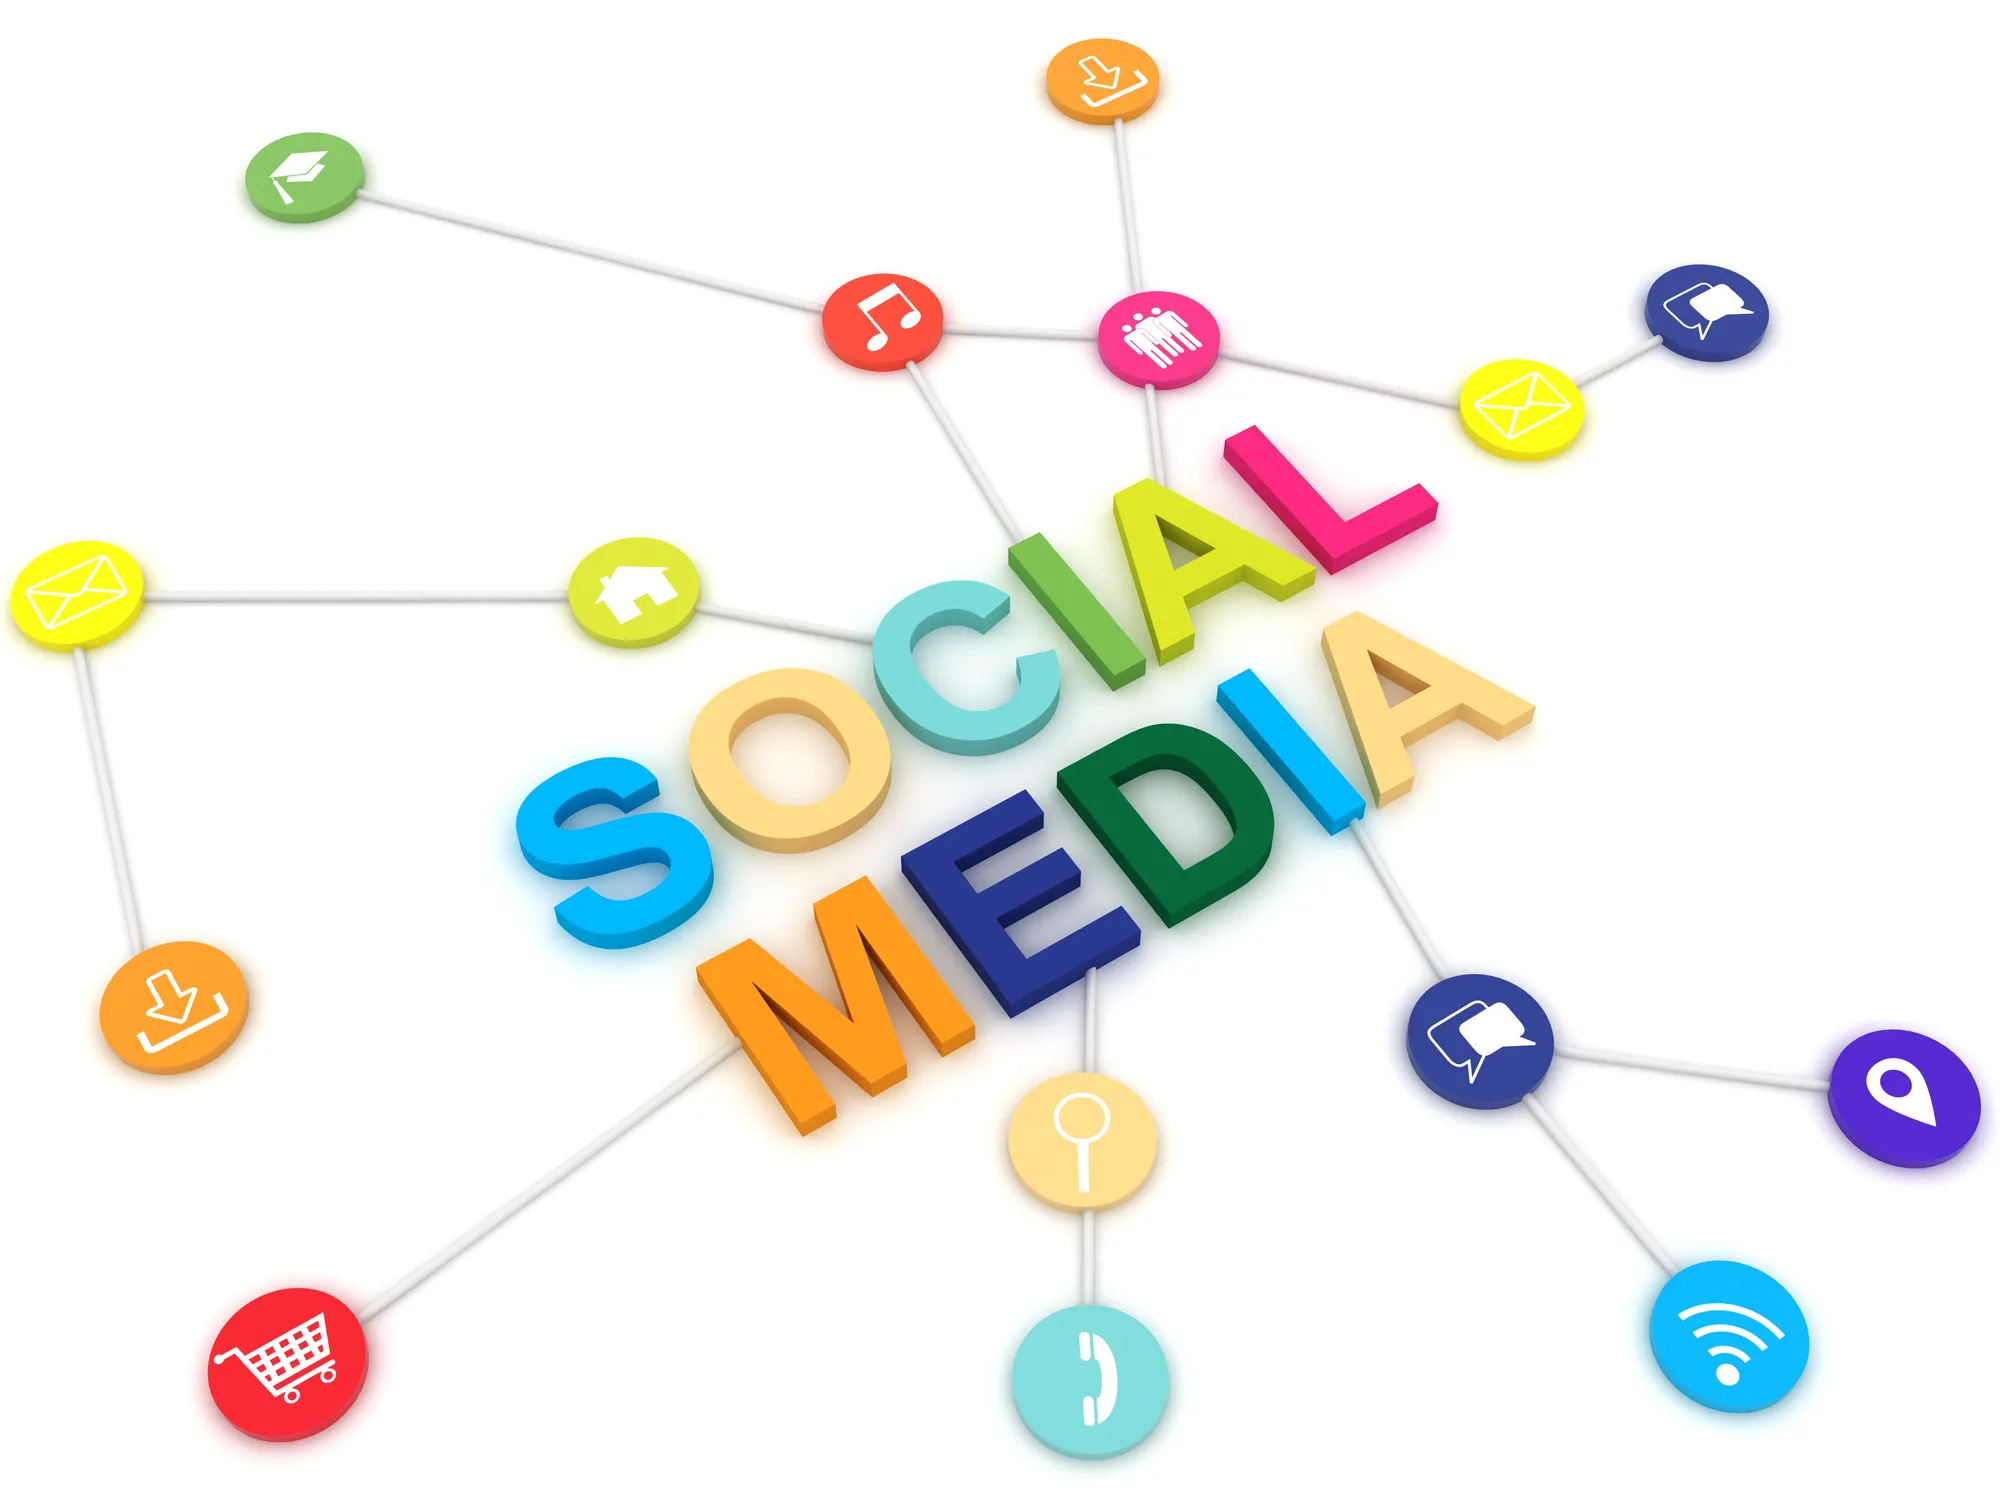 Social media icons, facebook, linkedin, twitter, instagram and other social media sites.